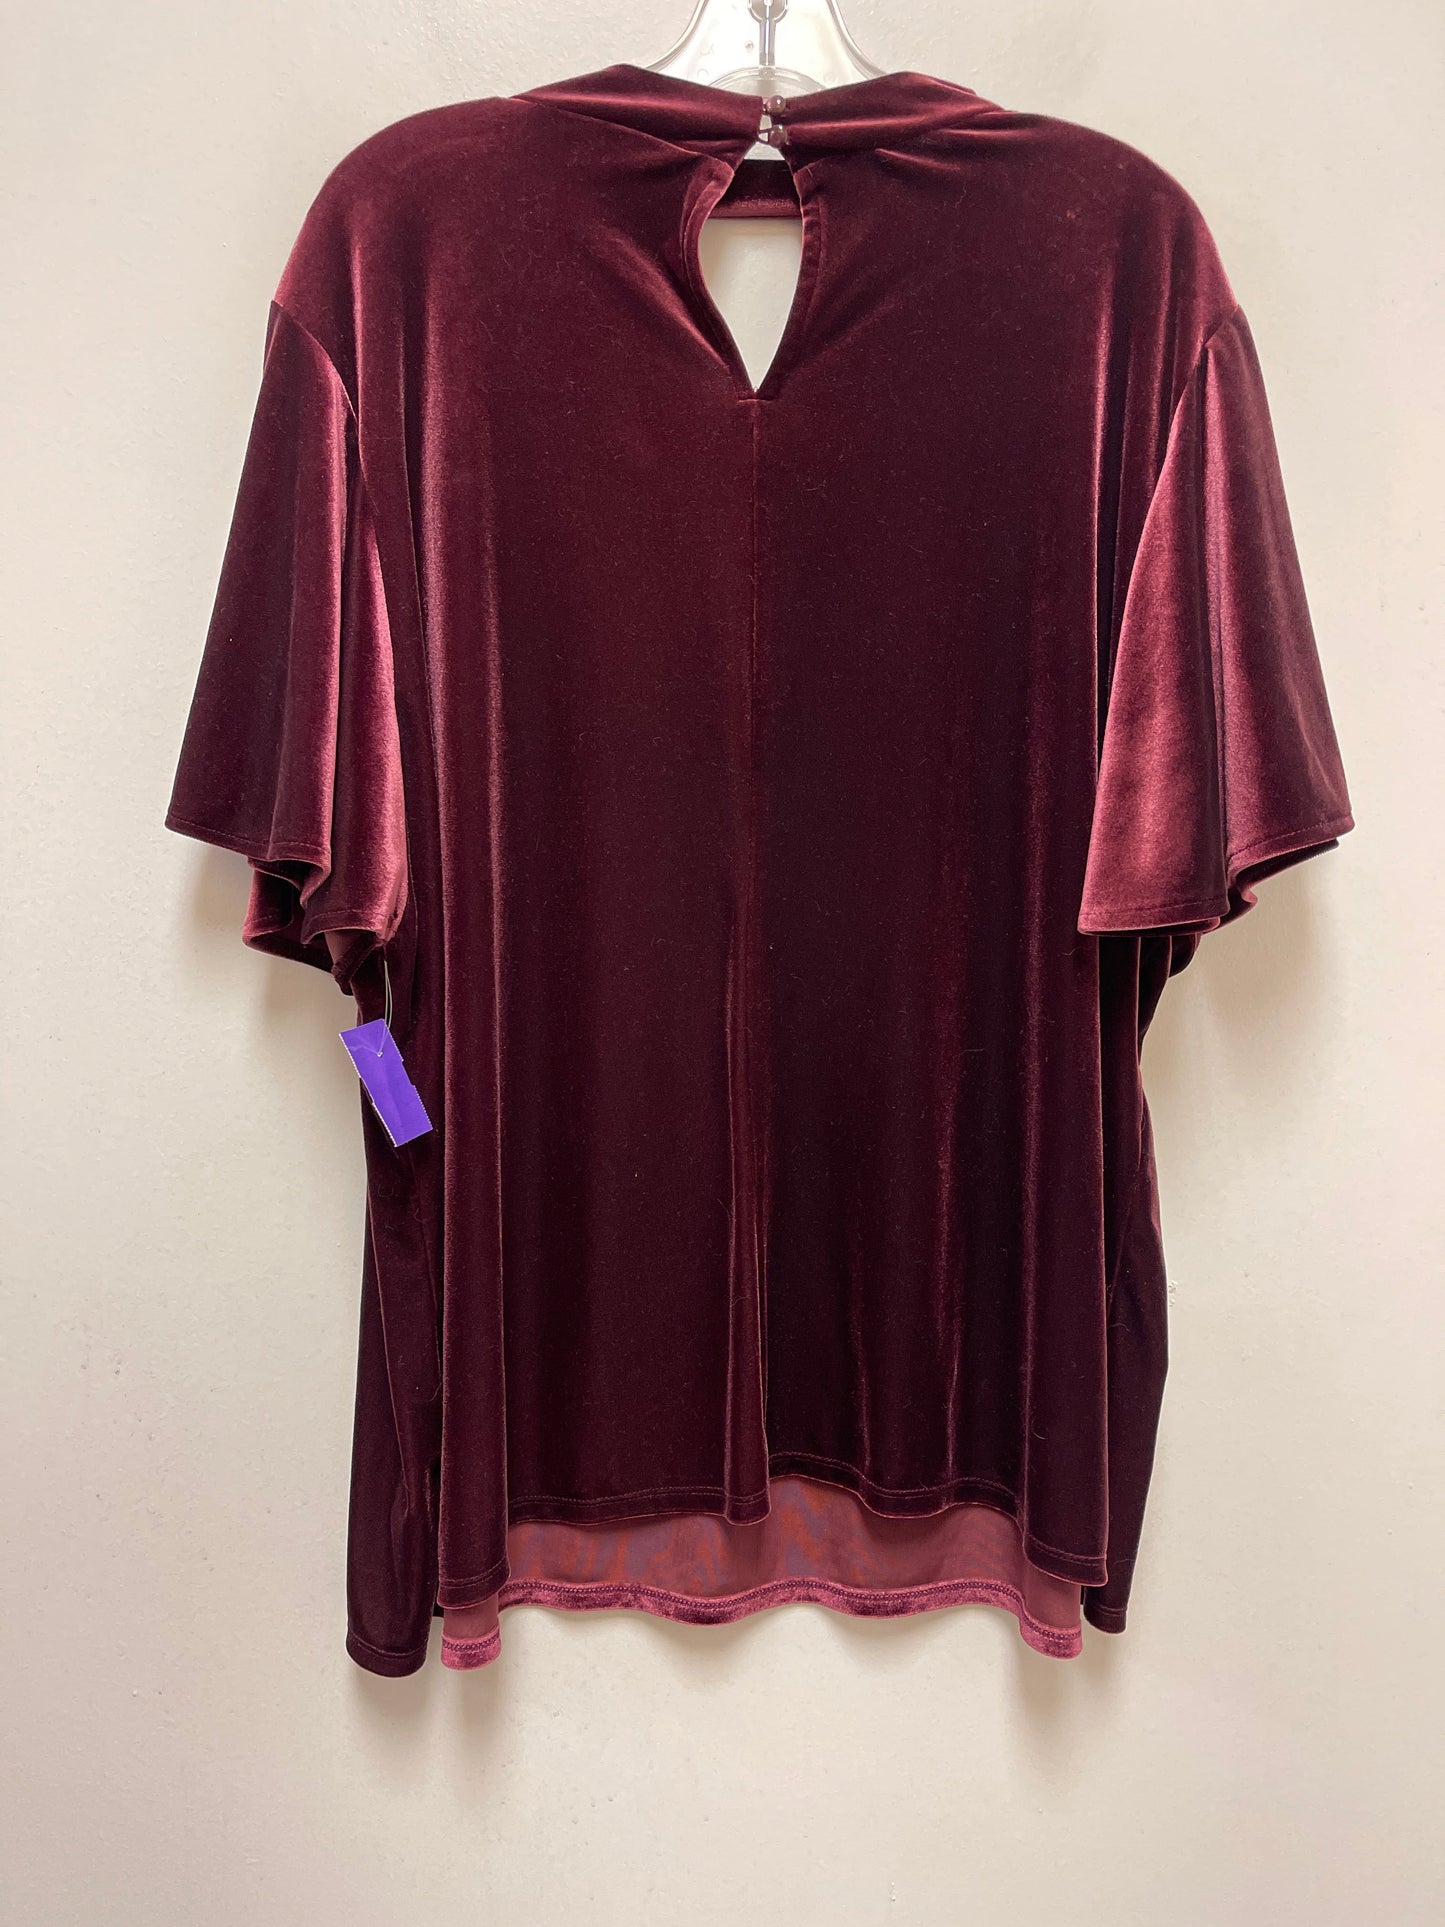 Purple Top Short Sleeve Worthington, Size 3x